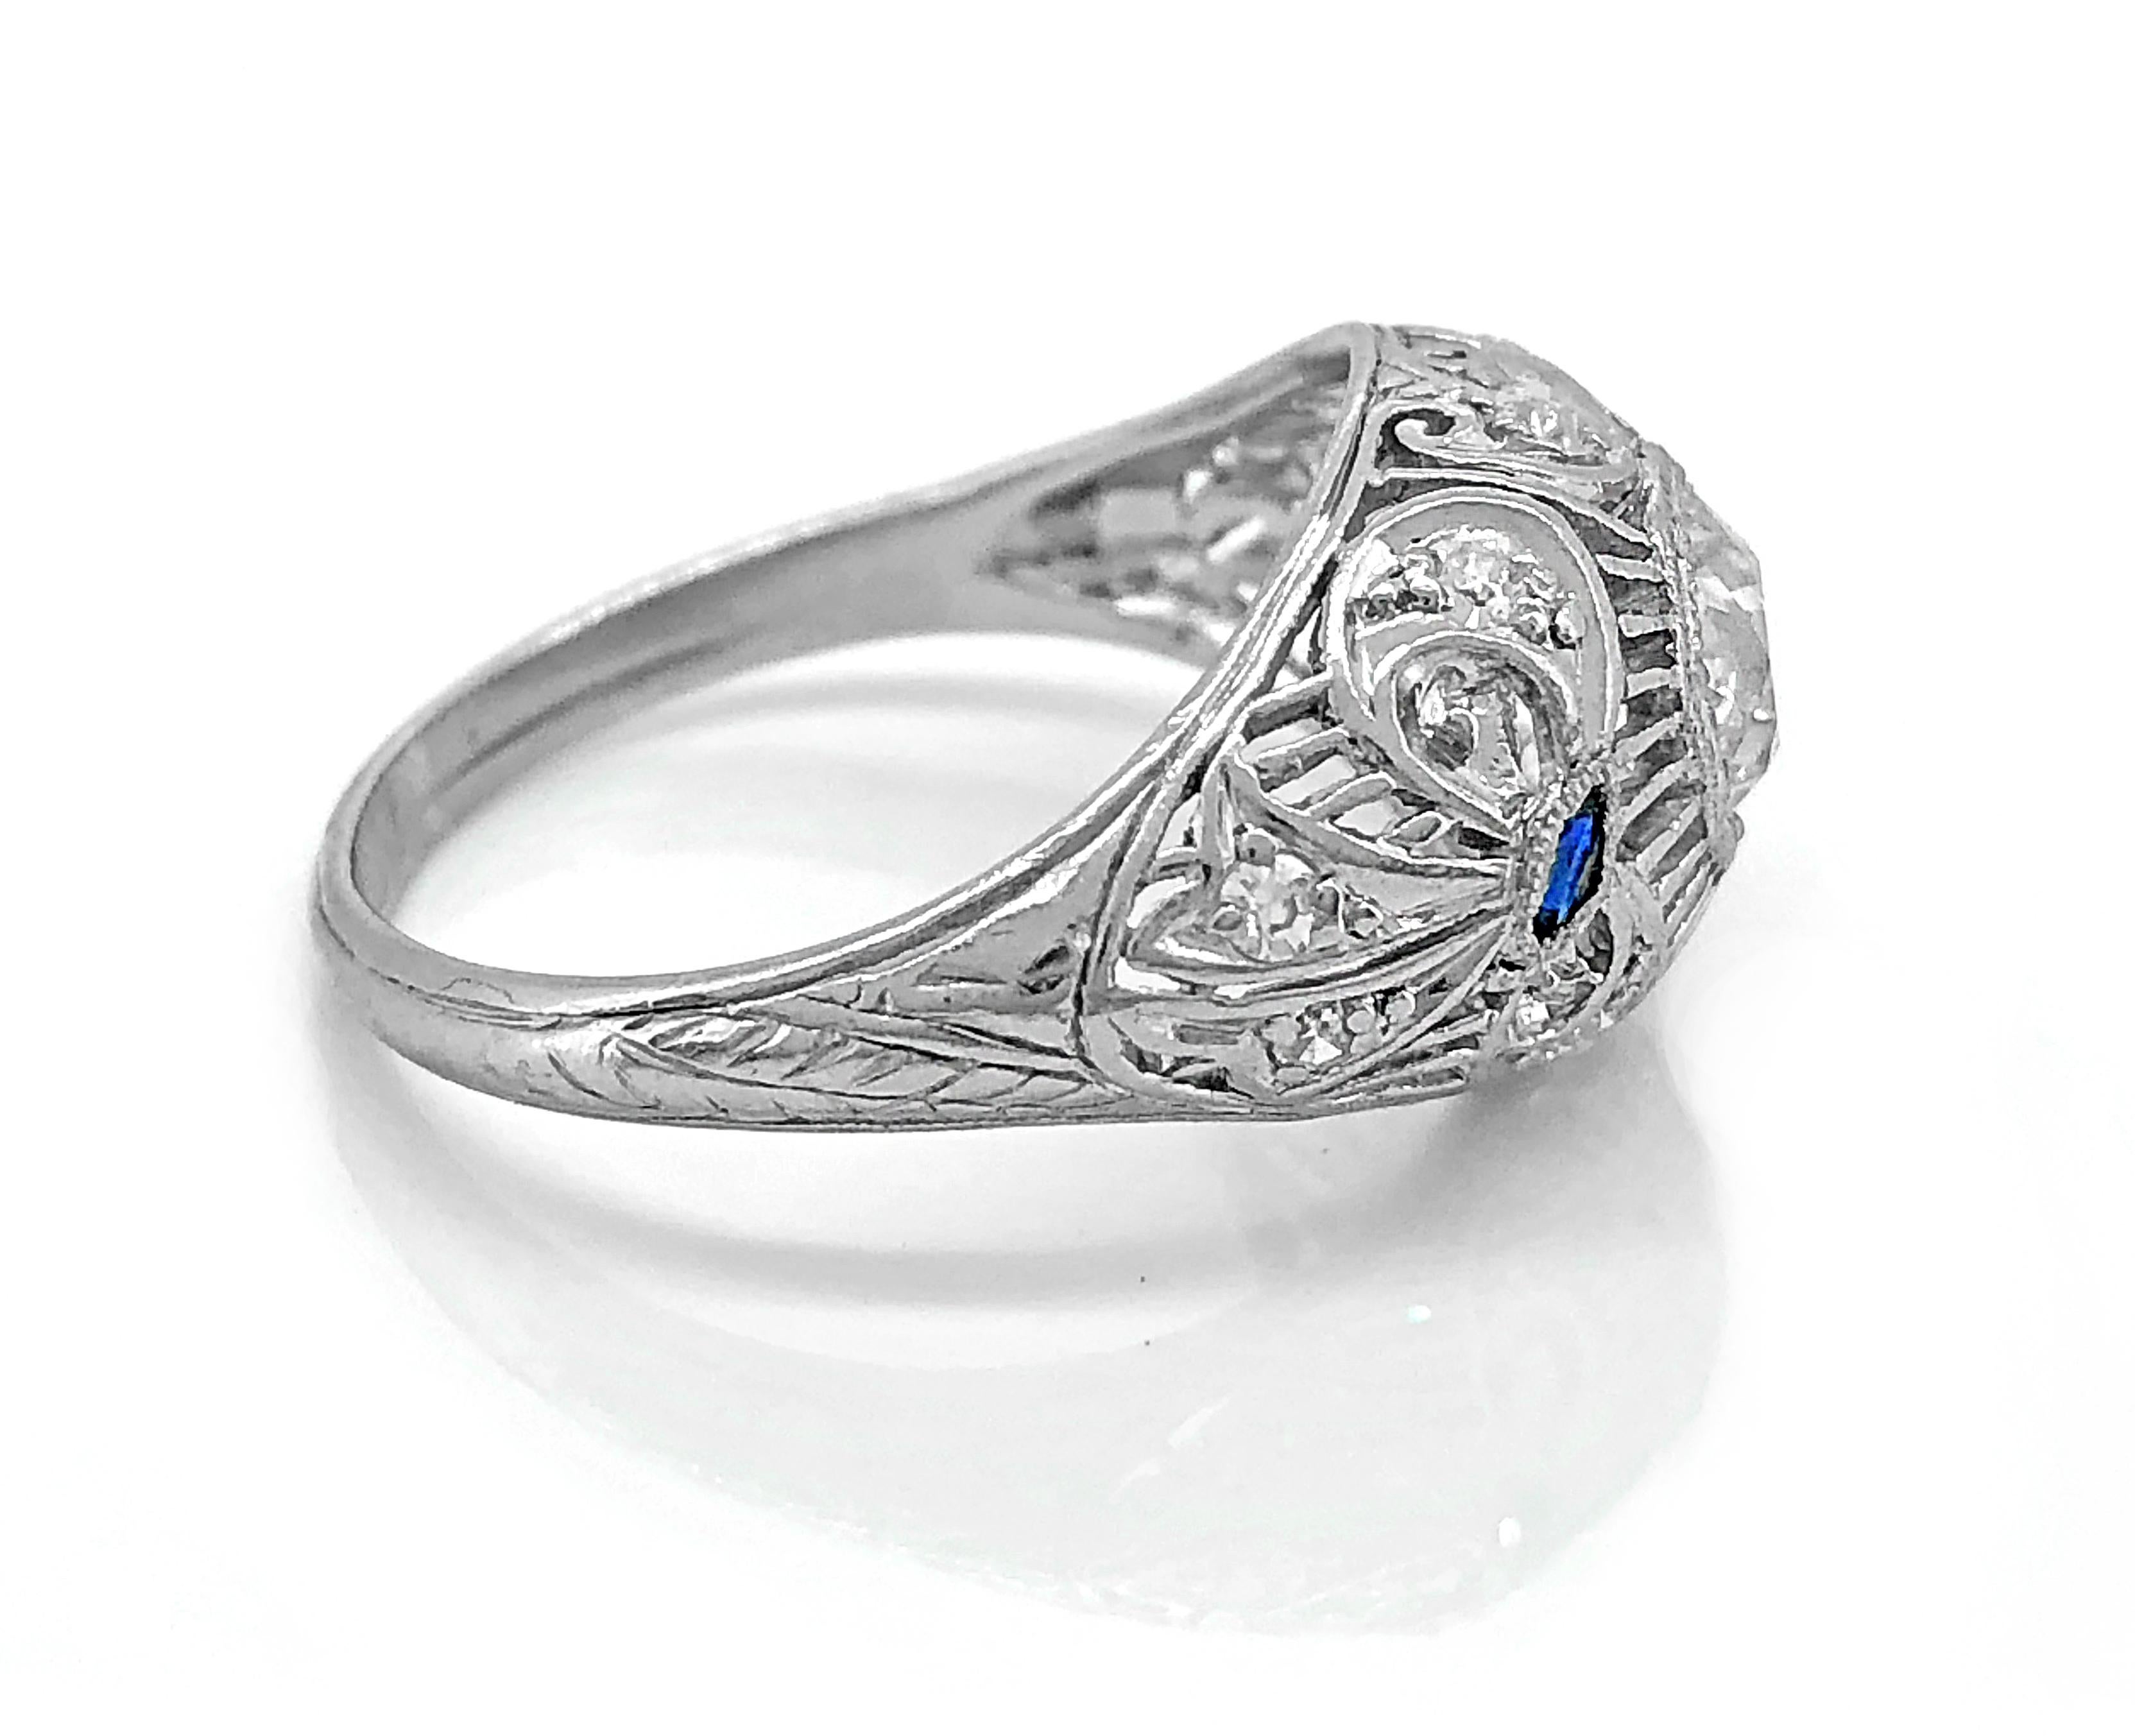 70 carat diamond ring